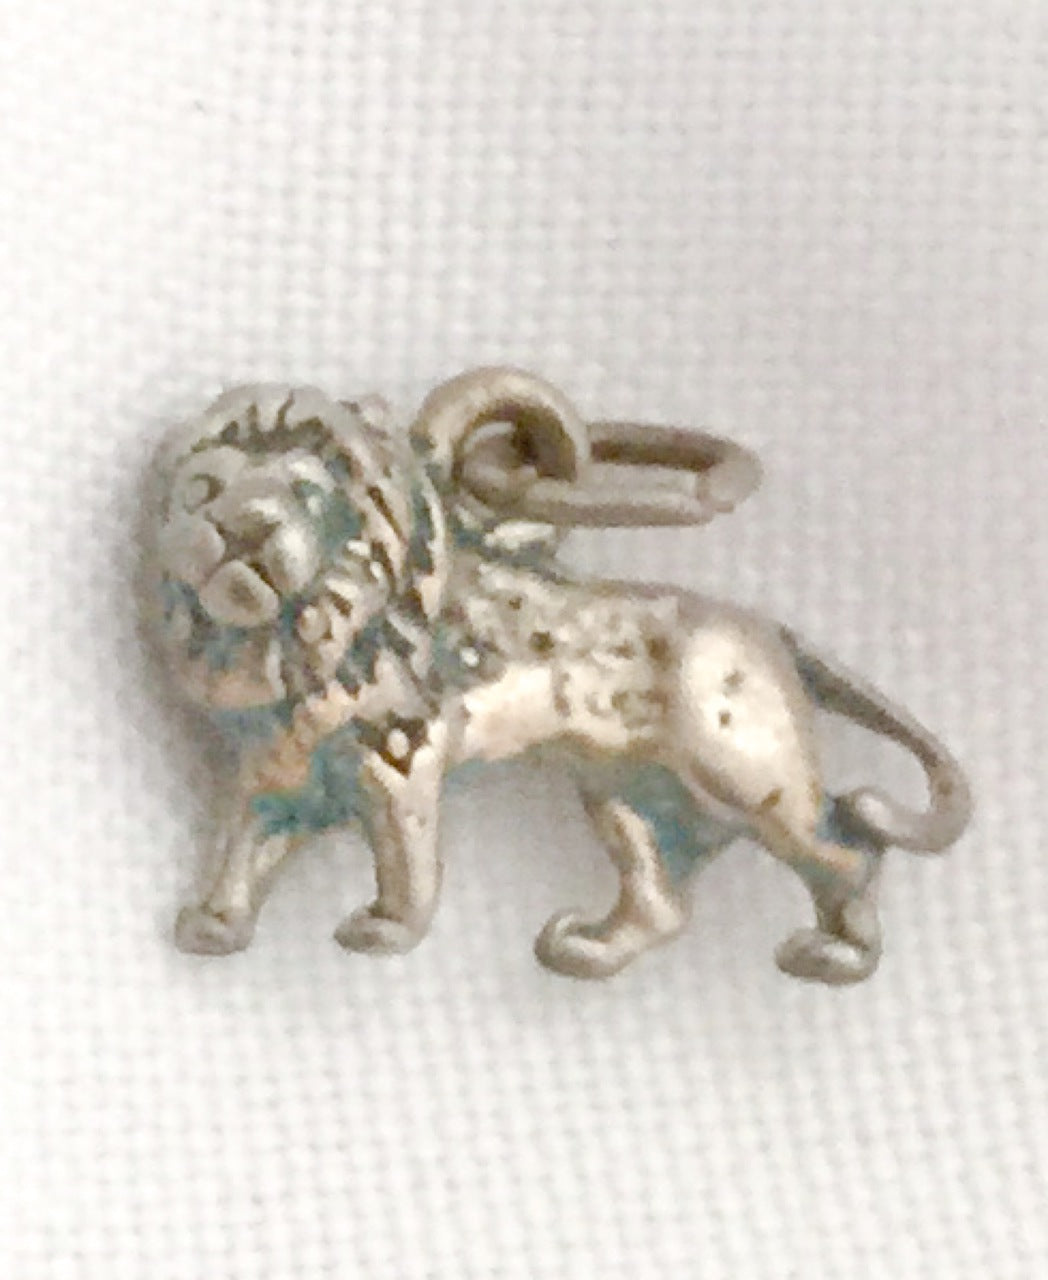 Vintage Sterling Silver Lion Charm